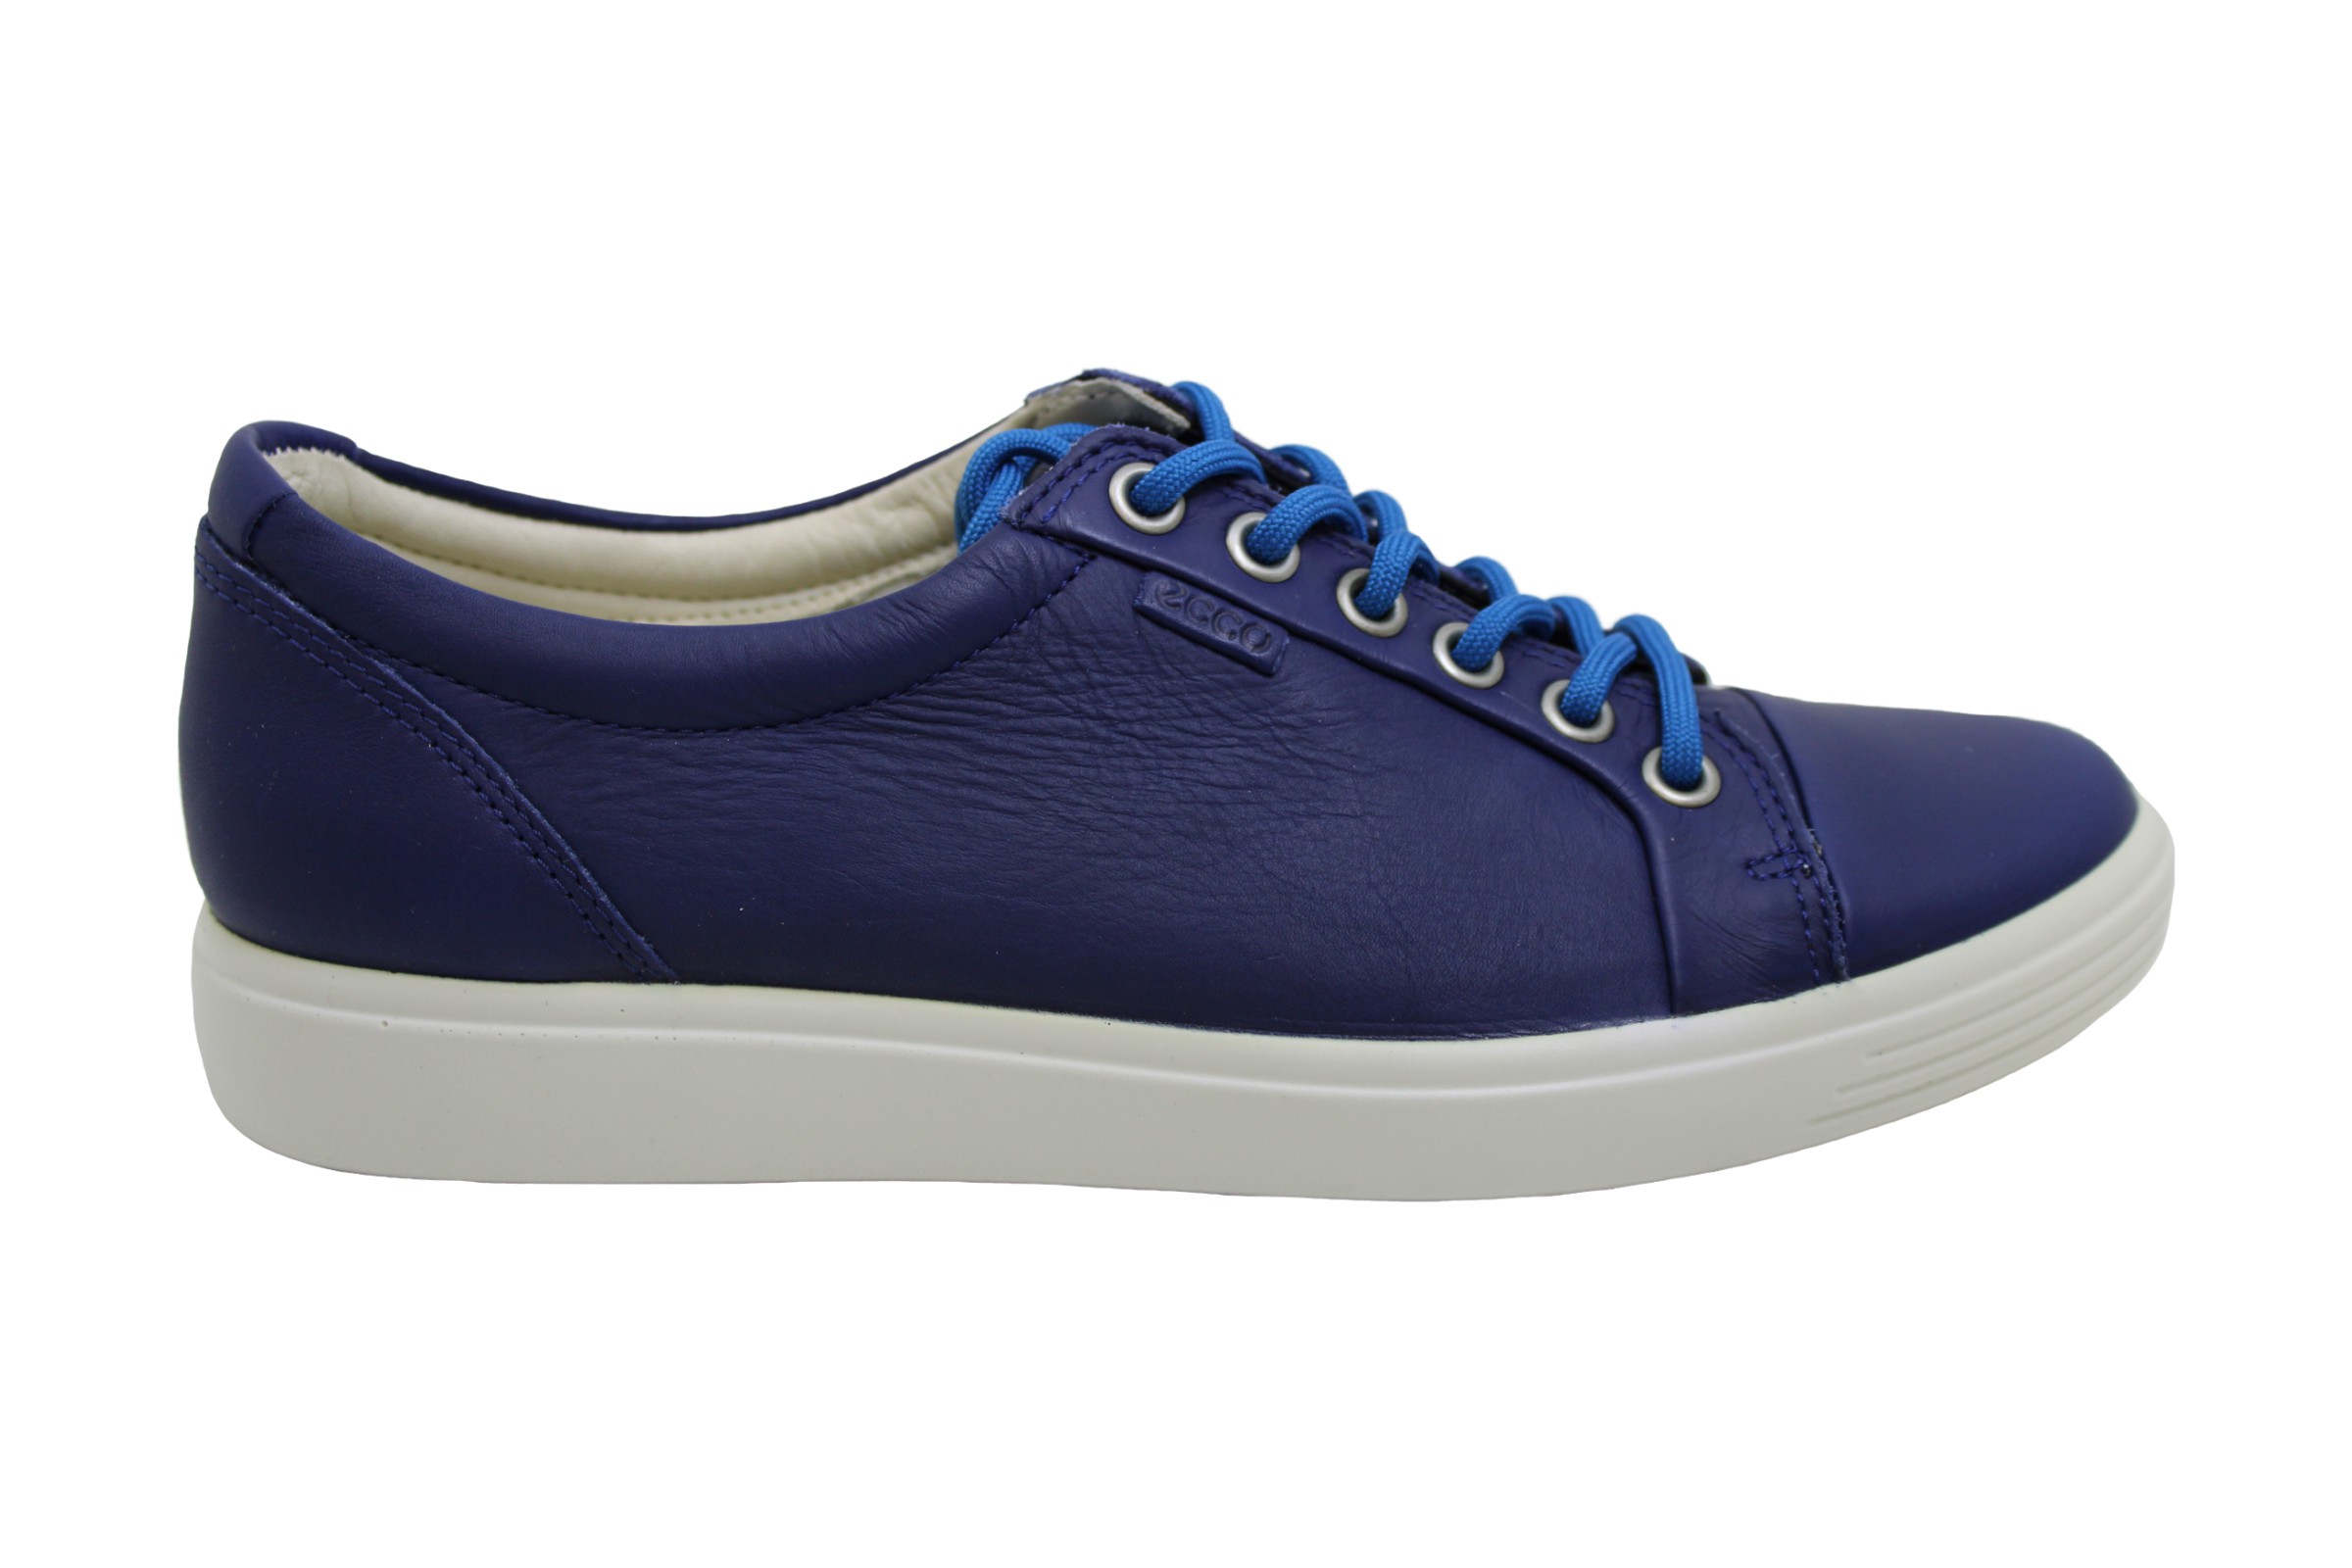 ECCO Womens Fashion Sneakers in Blue Color, Size 6 CLU | eBay